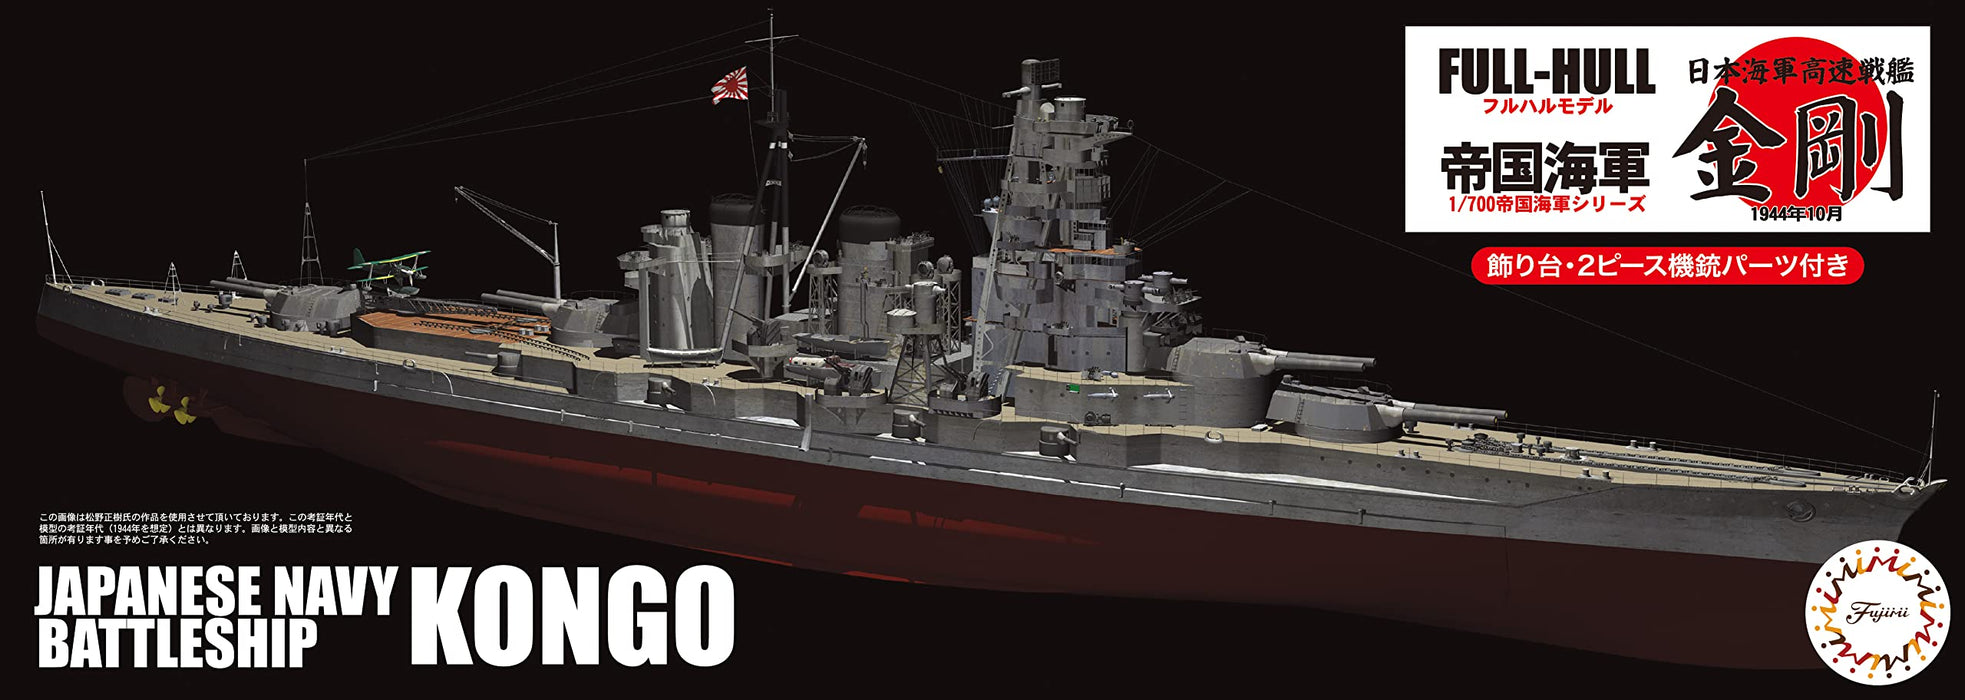 FUJIMI Full Hull 1/700 Japanisches Marine-Schnellschlachtschiff Kongo Plastikmodell